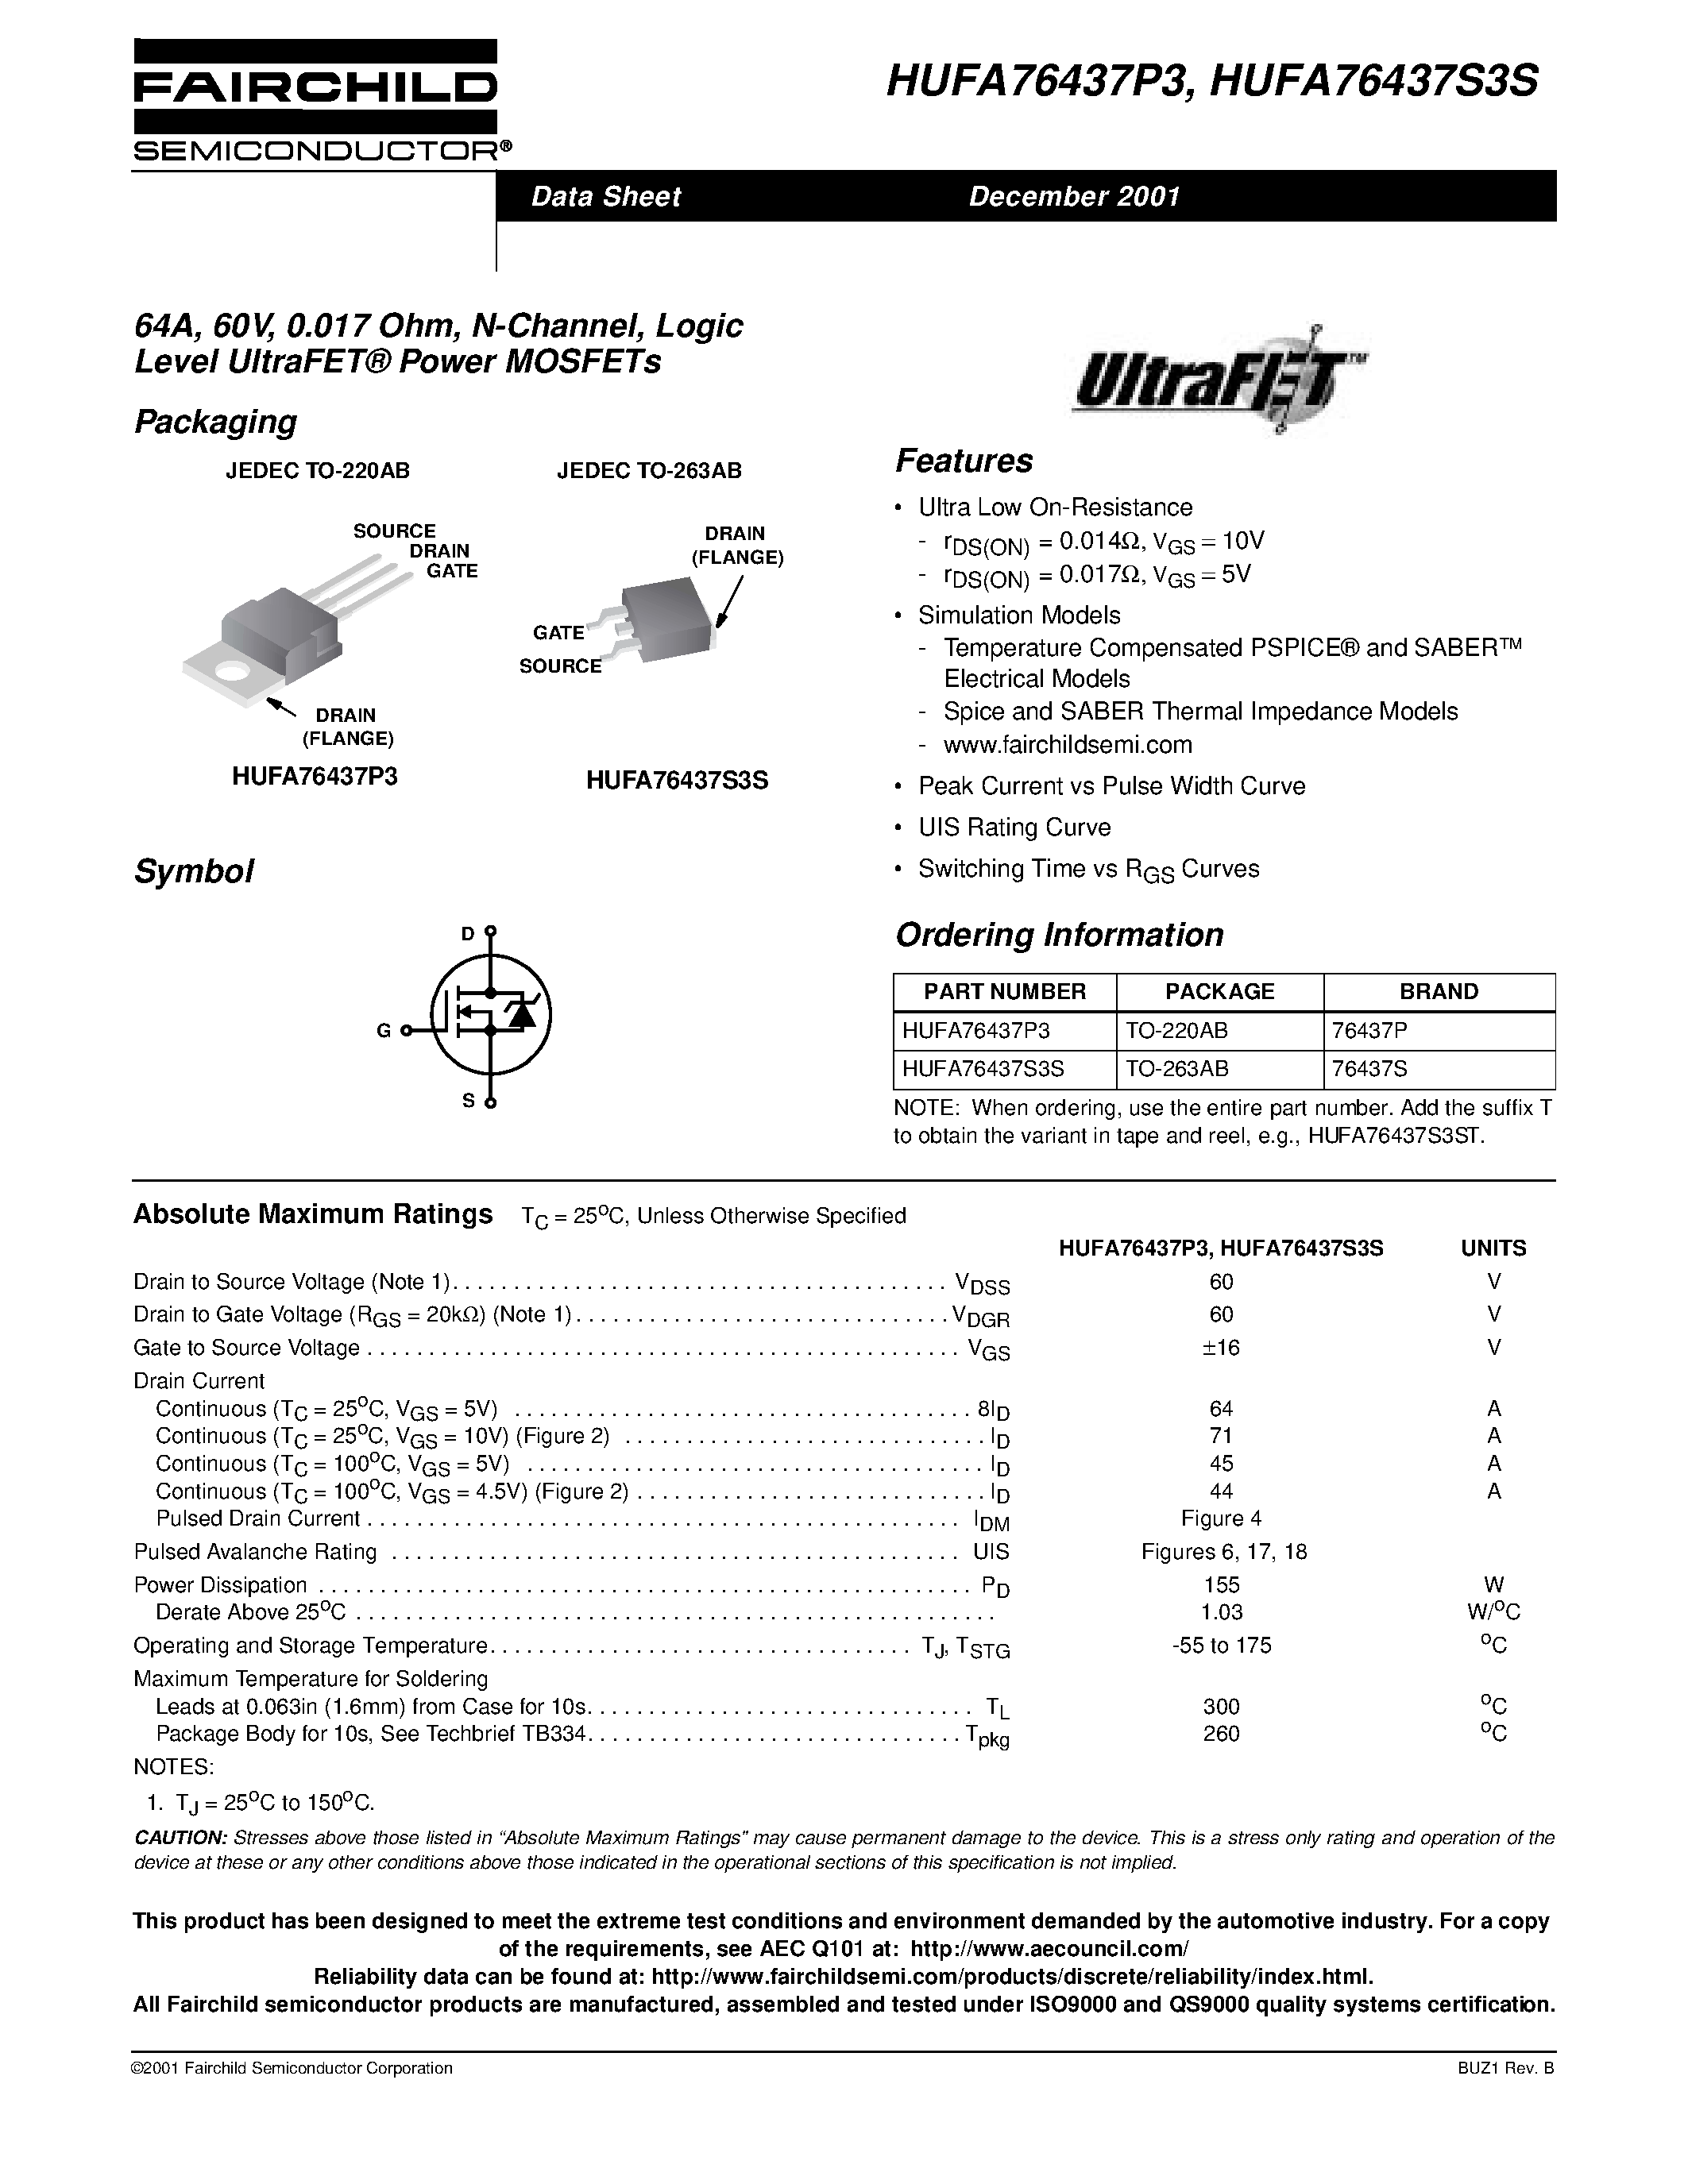 Даташит HUFA76437S3S - 64A/ 60V/ 0.017 Ohm/ N-Channel/ Logic Level UltraFET Power MOSFETs страница 1